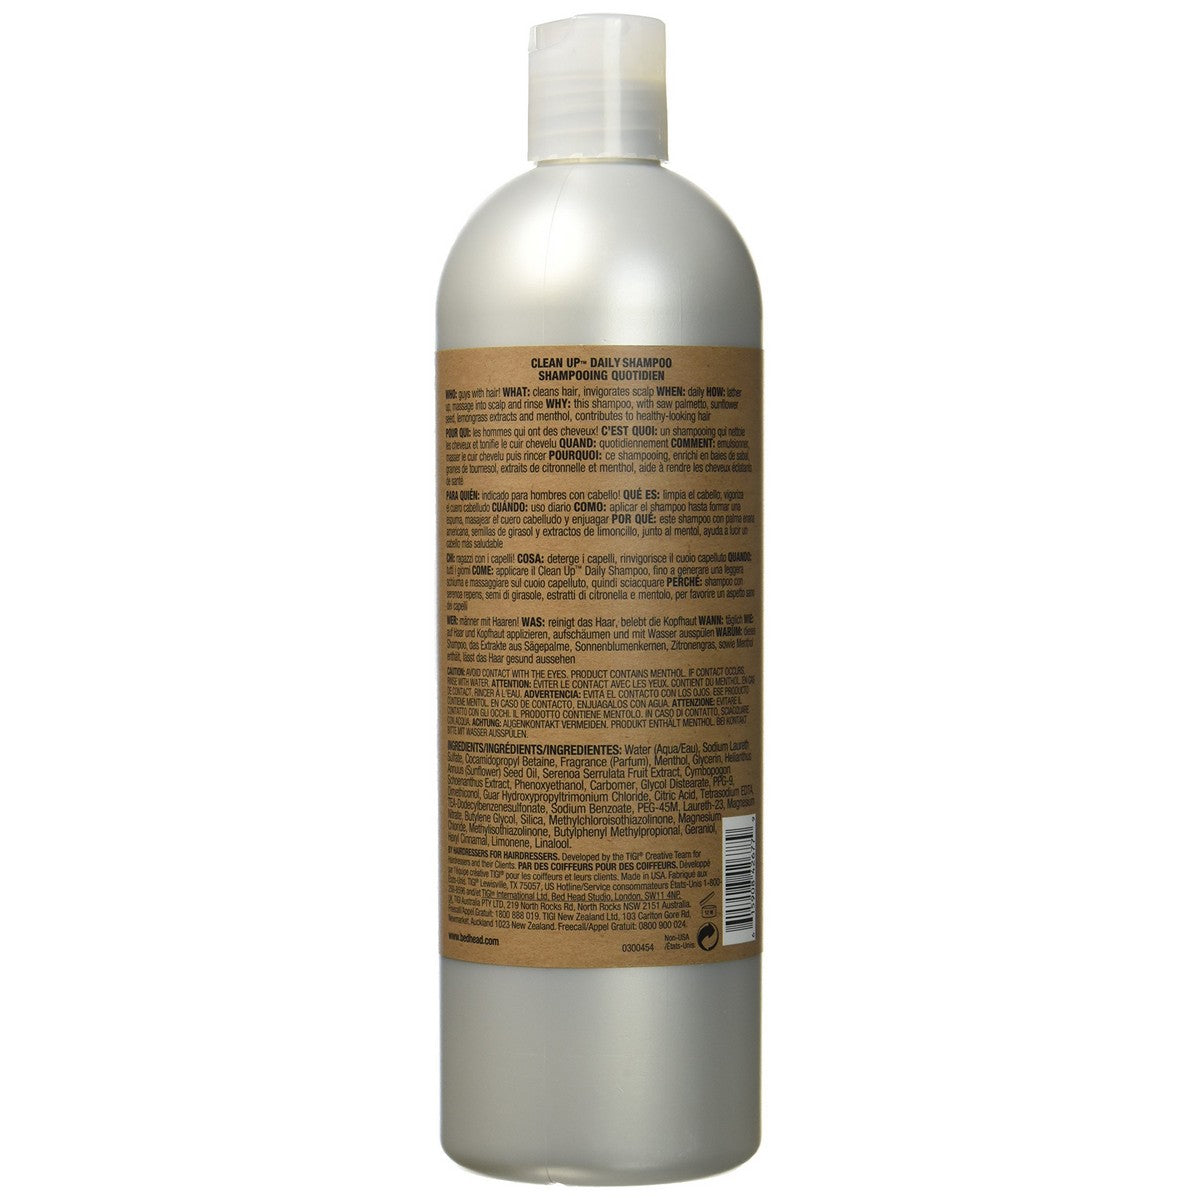 Deep Cleaning Shampoo Tigi TMC426779